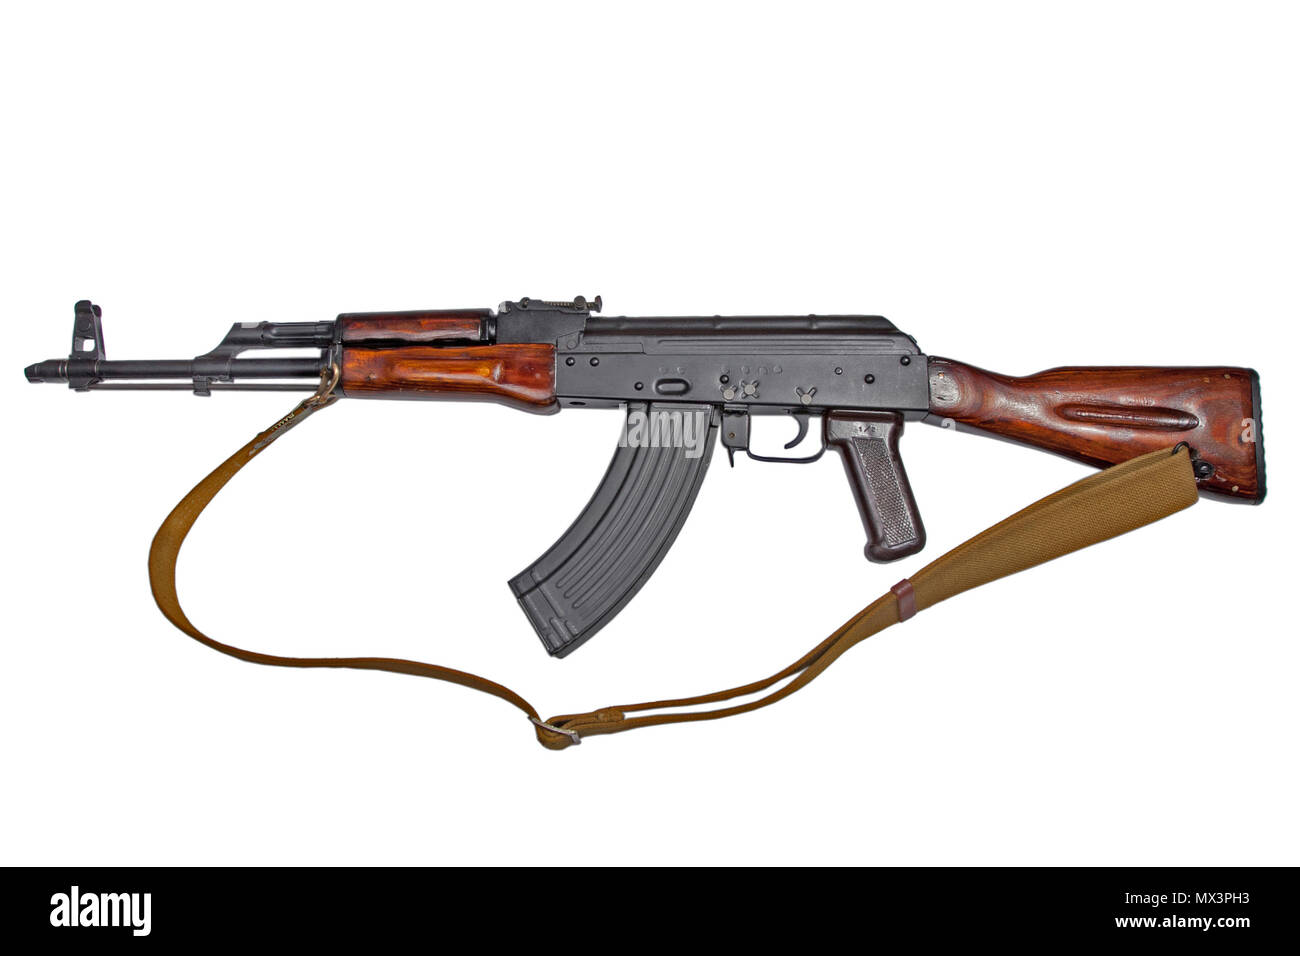 AKM  Avtomat Kalashnikova Kalashnikov assault rifle on white Stock Photo